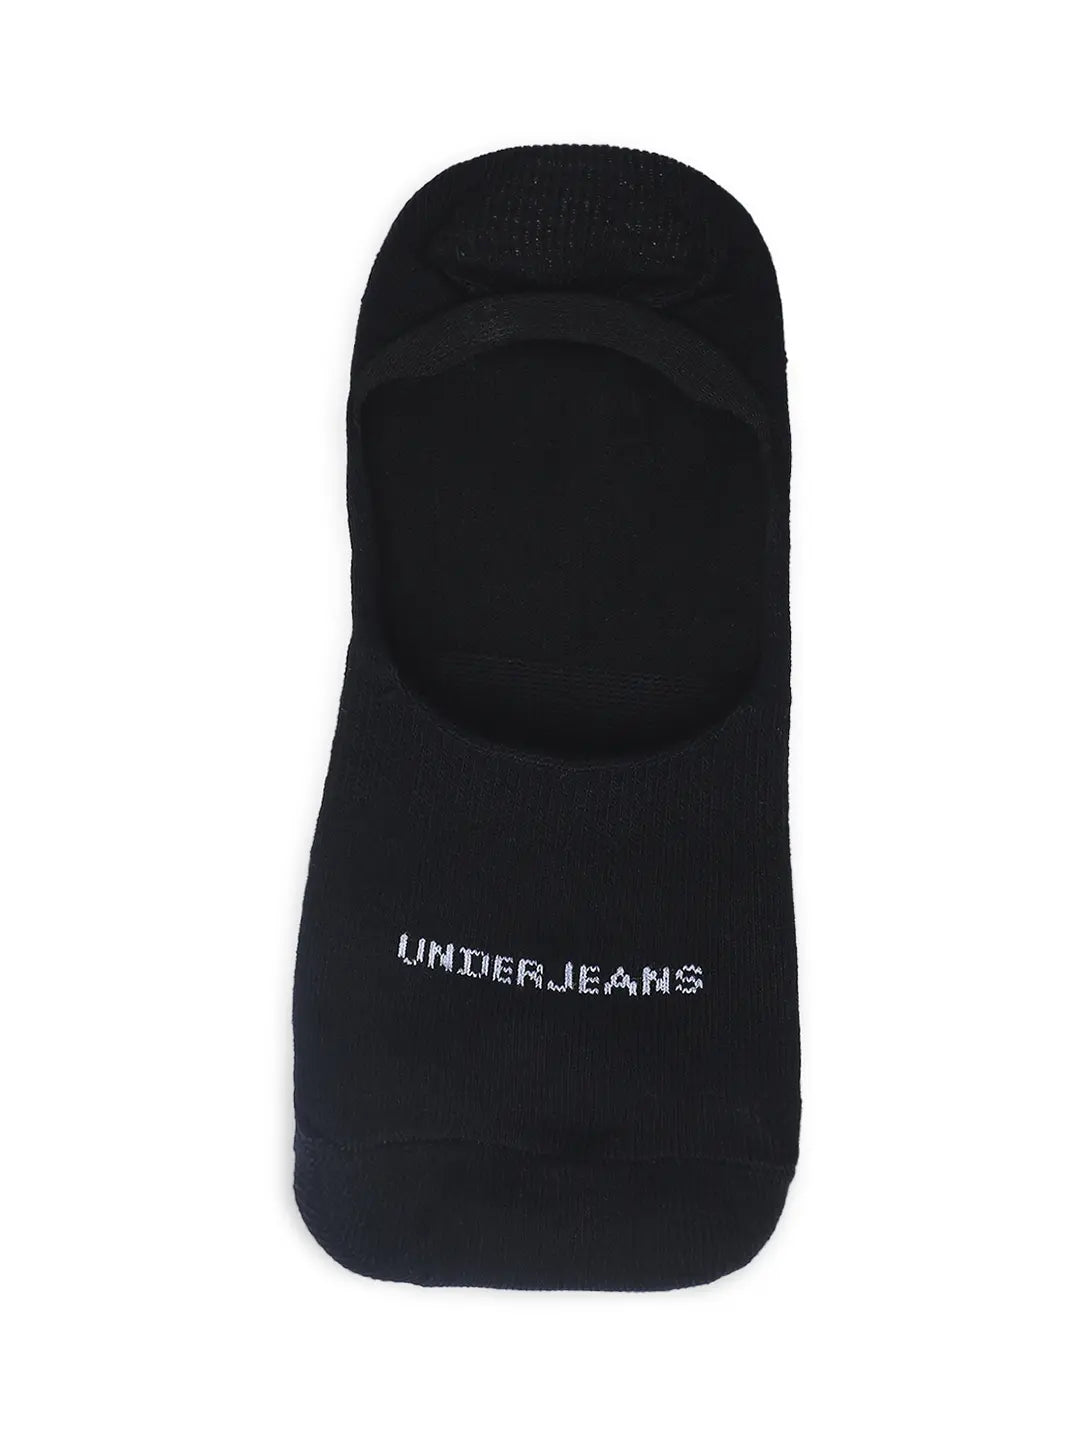 Underjeans By Spykar Men Black Cotton Blend No Show Socks - Pack Of 2